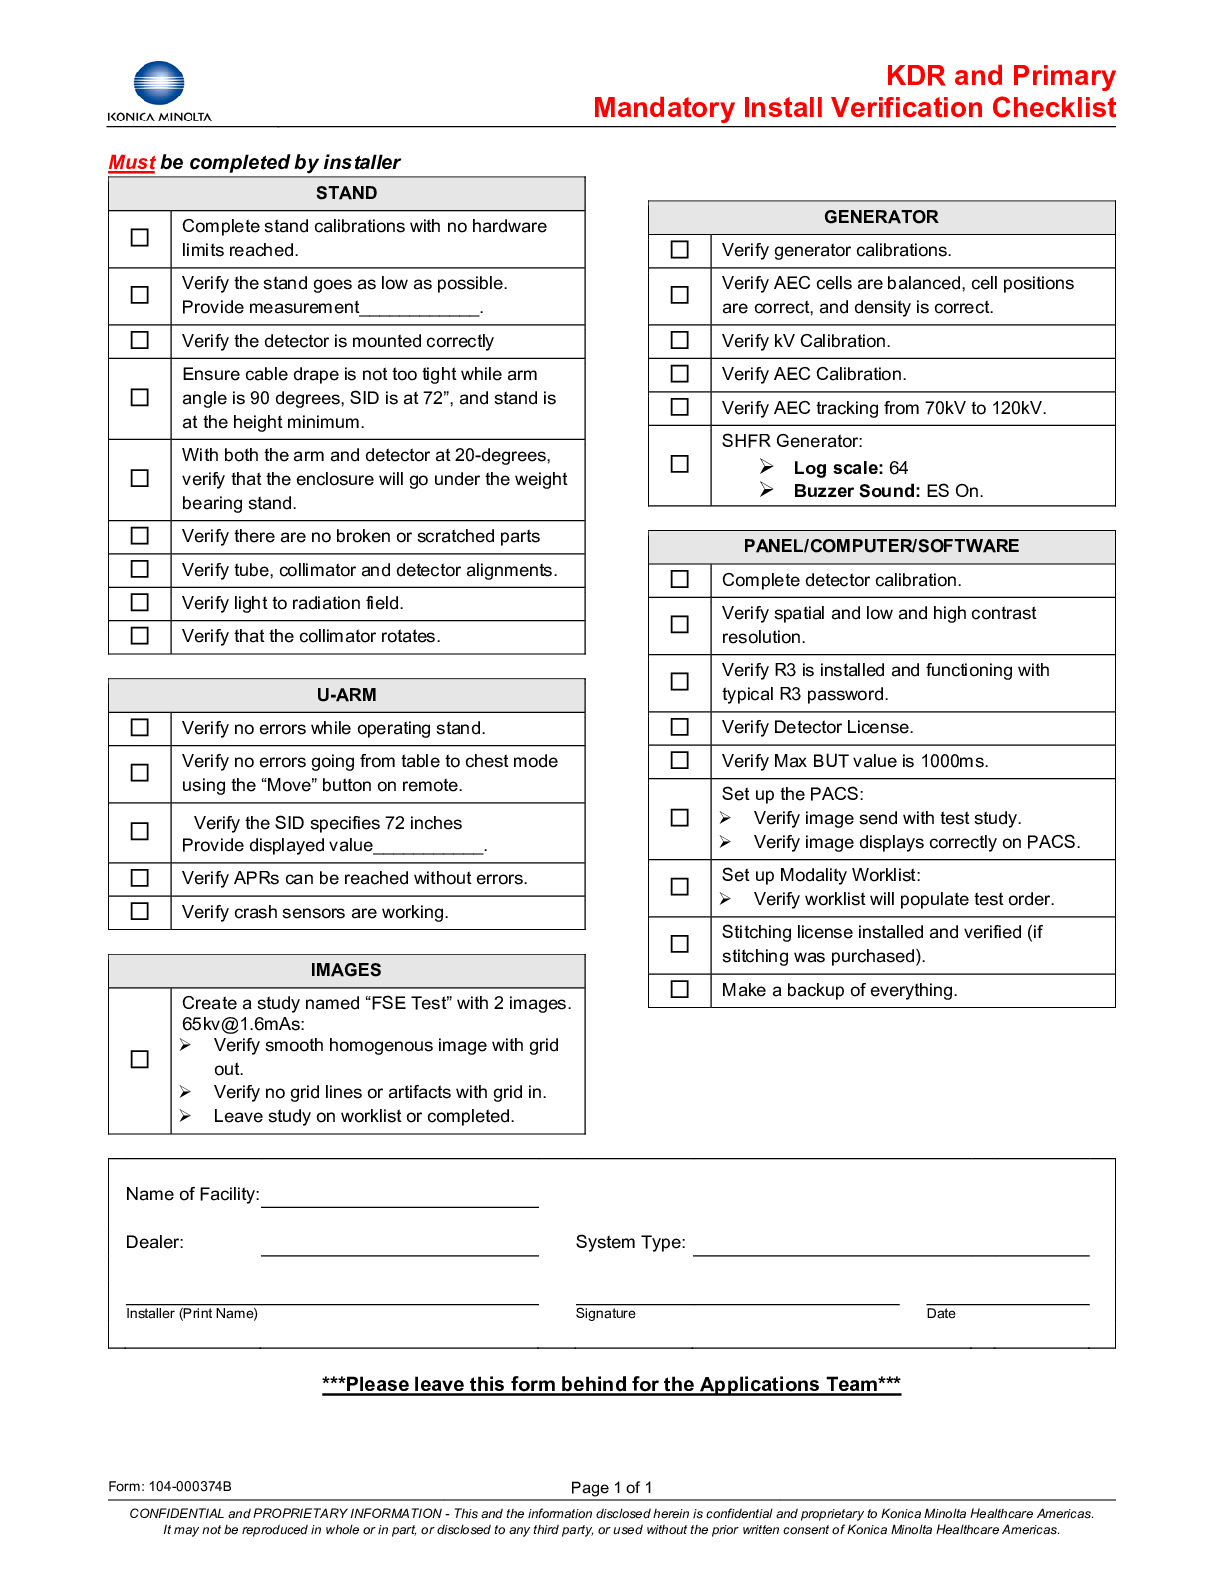 104-000374B KDR Primary Mandatory Install Verification Checklist